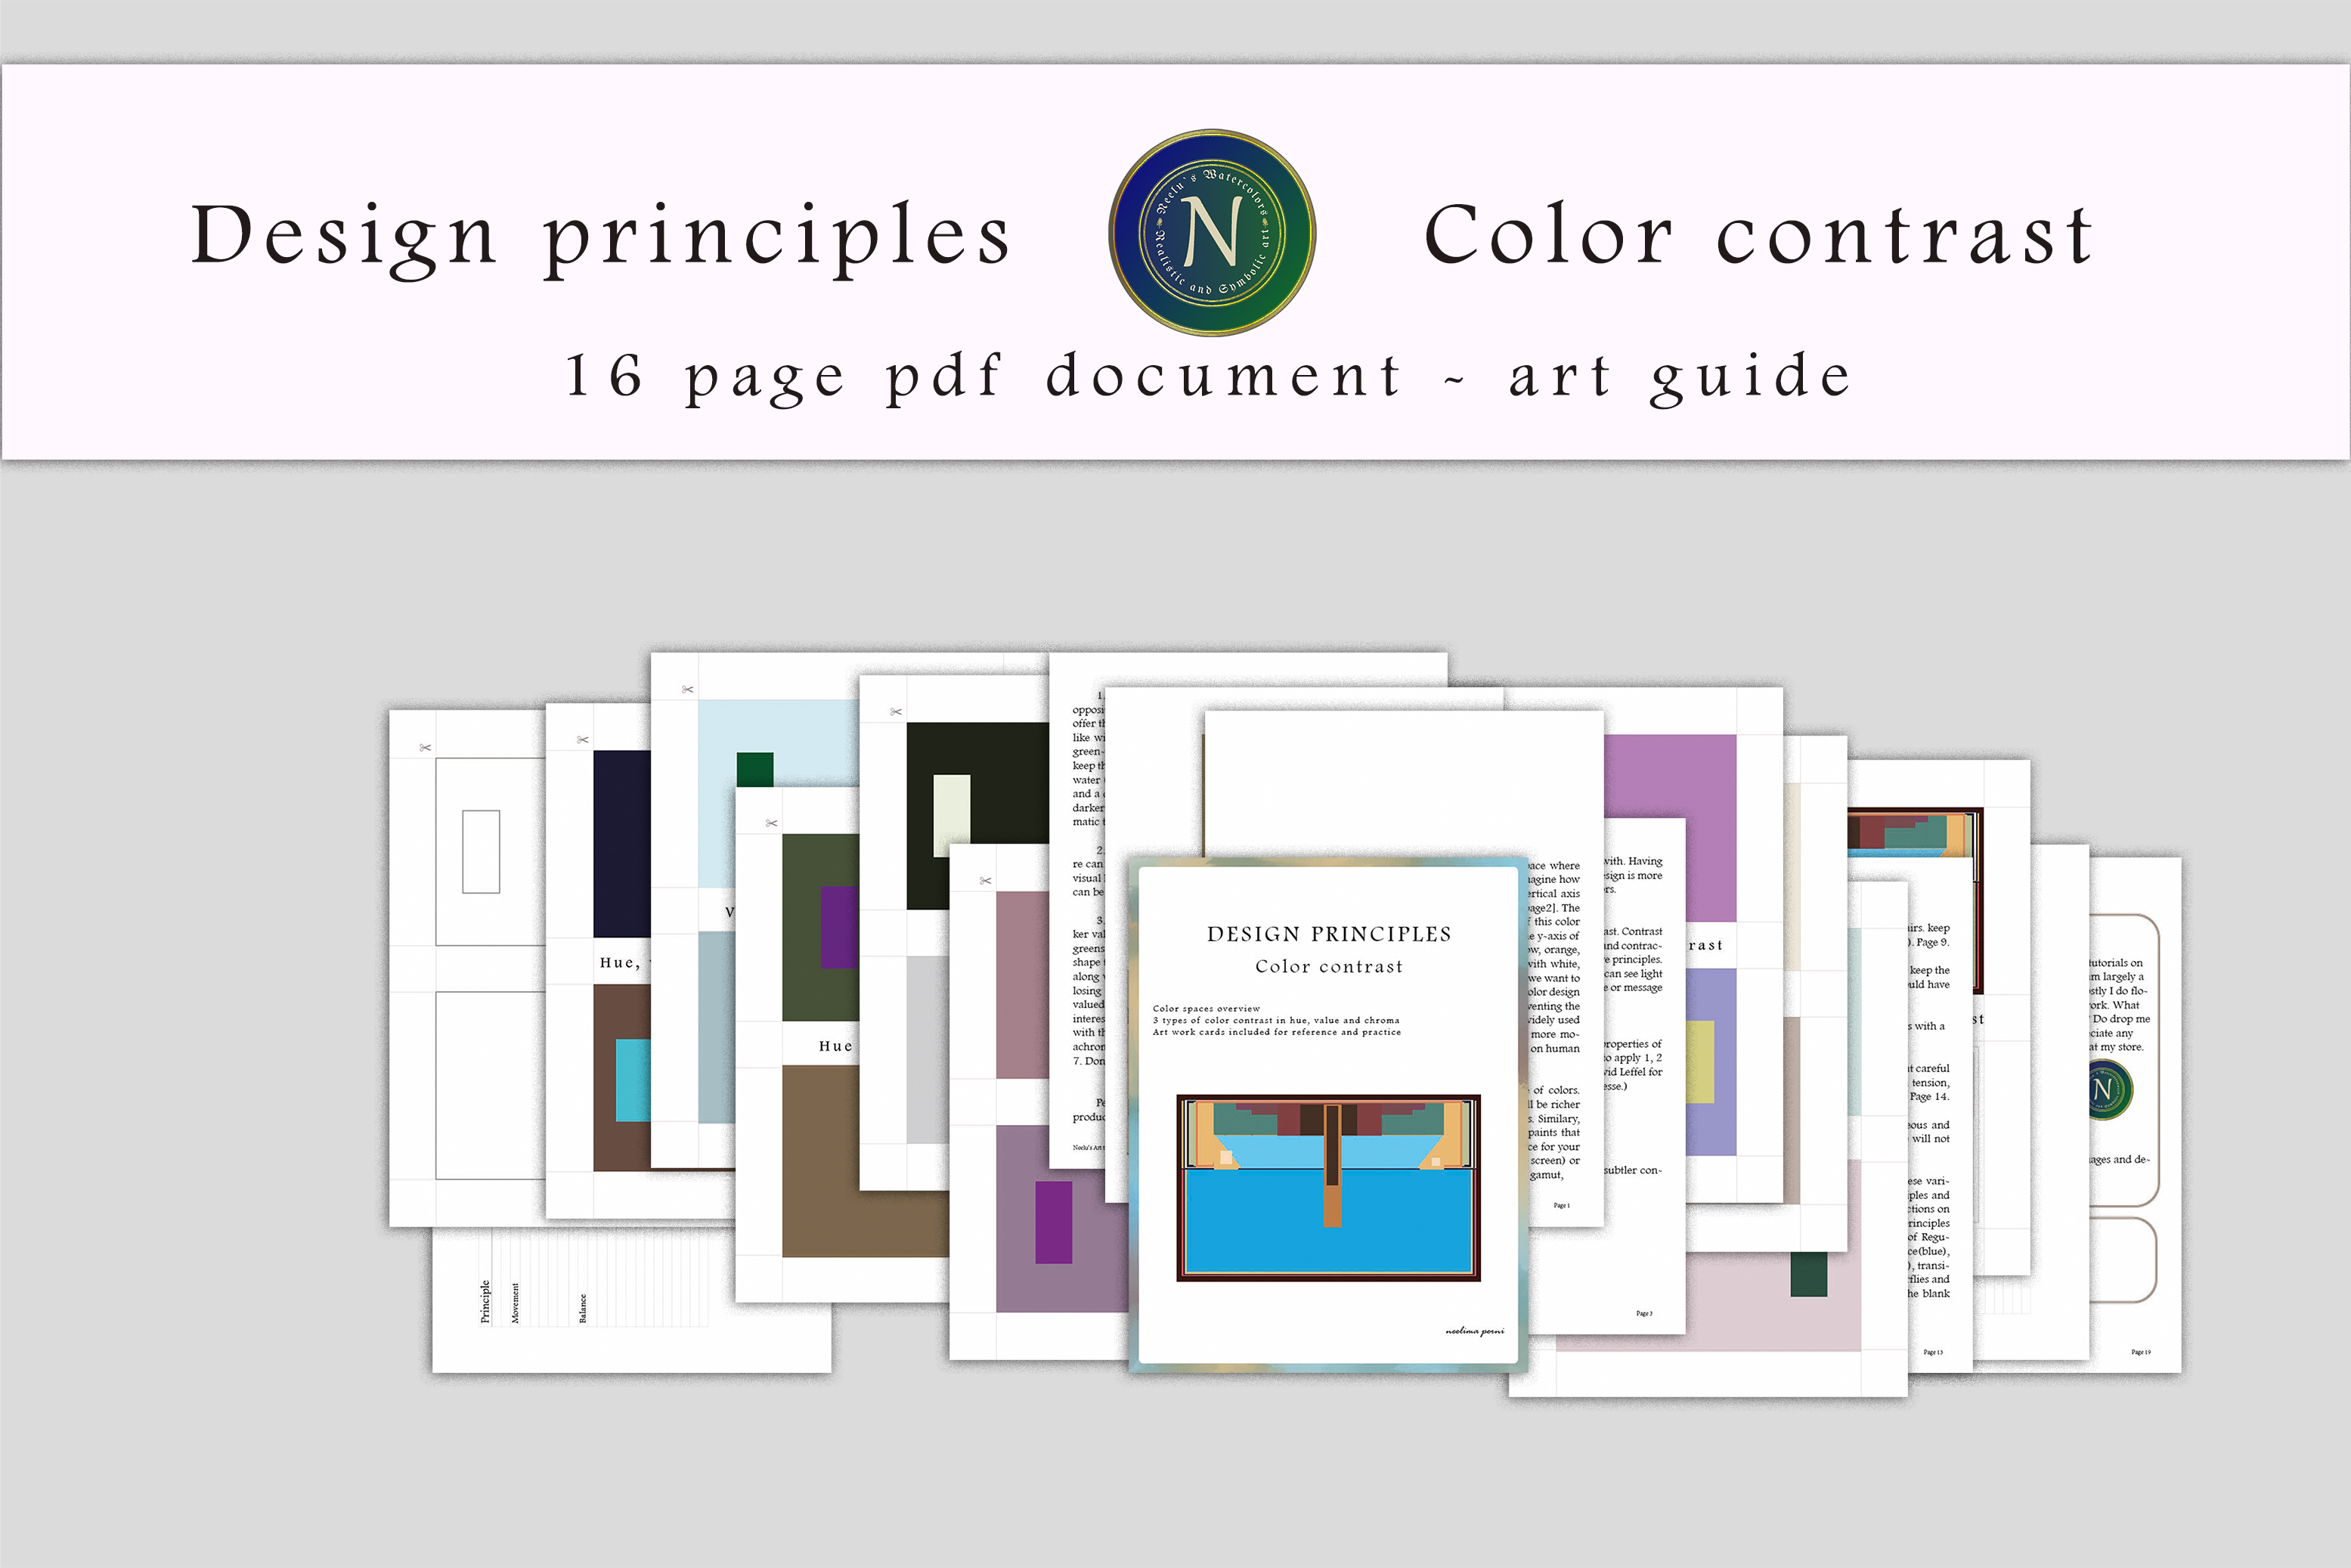 Design principles - color contrast art guide